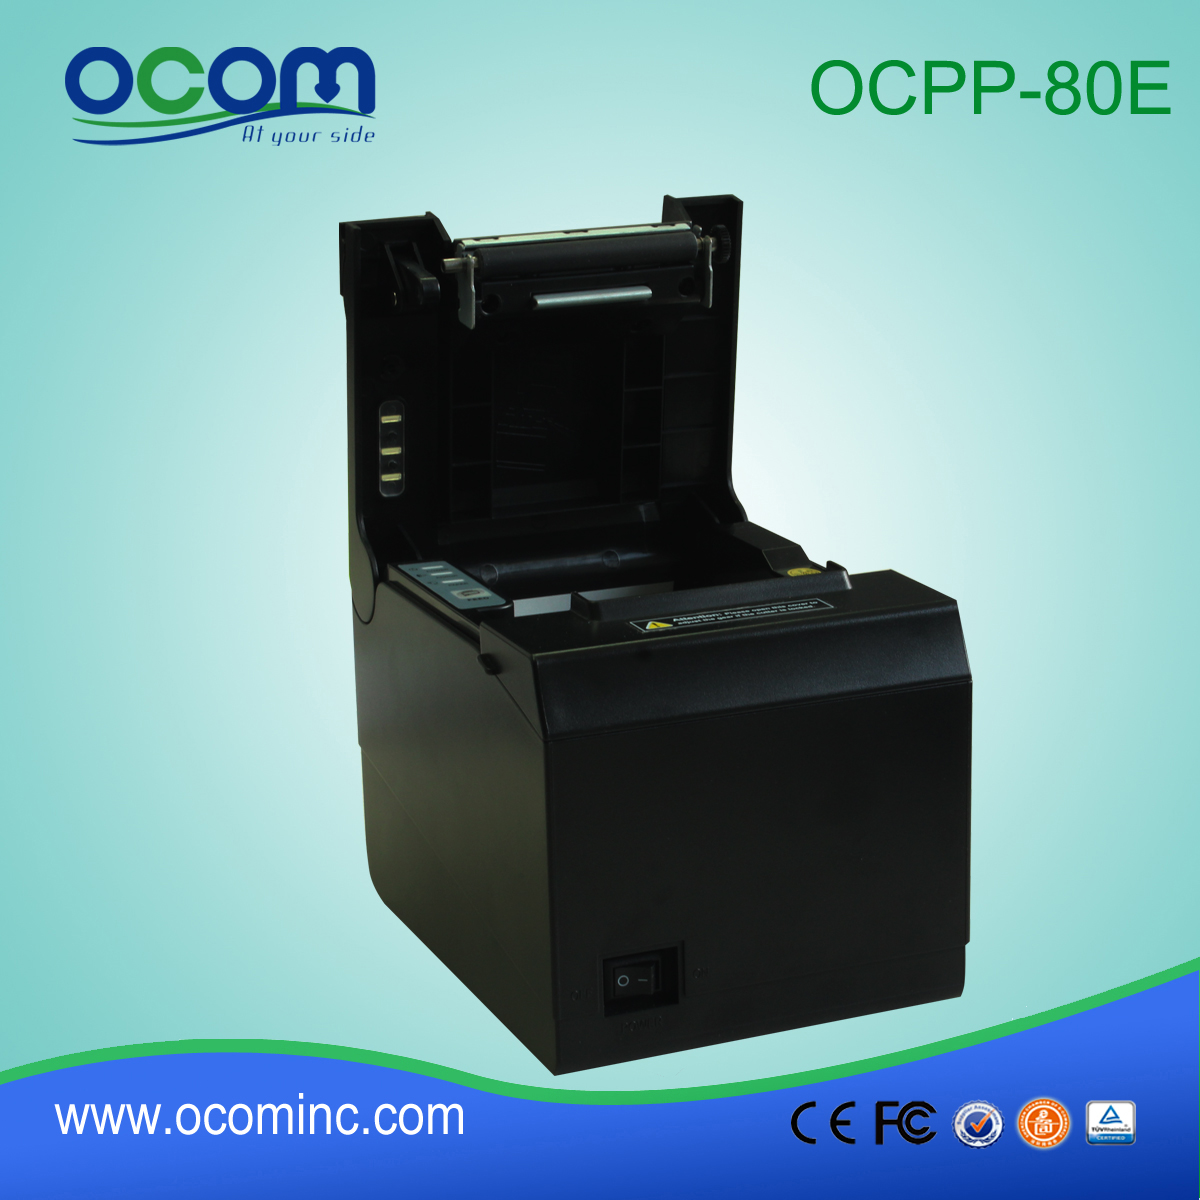 OCPP-80E USB / παράλληλο αυτόματο κόπτη 80 χιλιοστά εκτυπωτή φθηνά παραλαβή pos θερμική